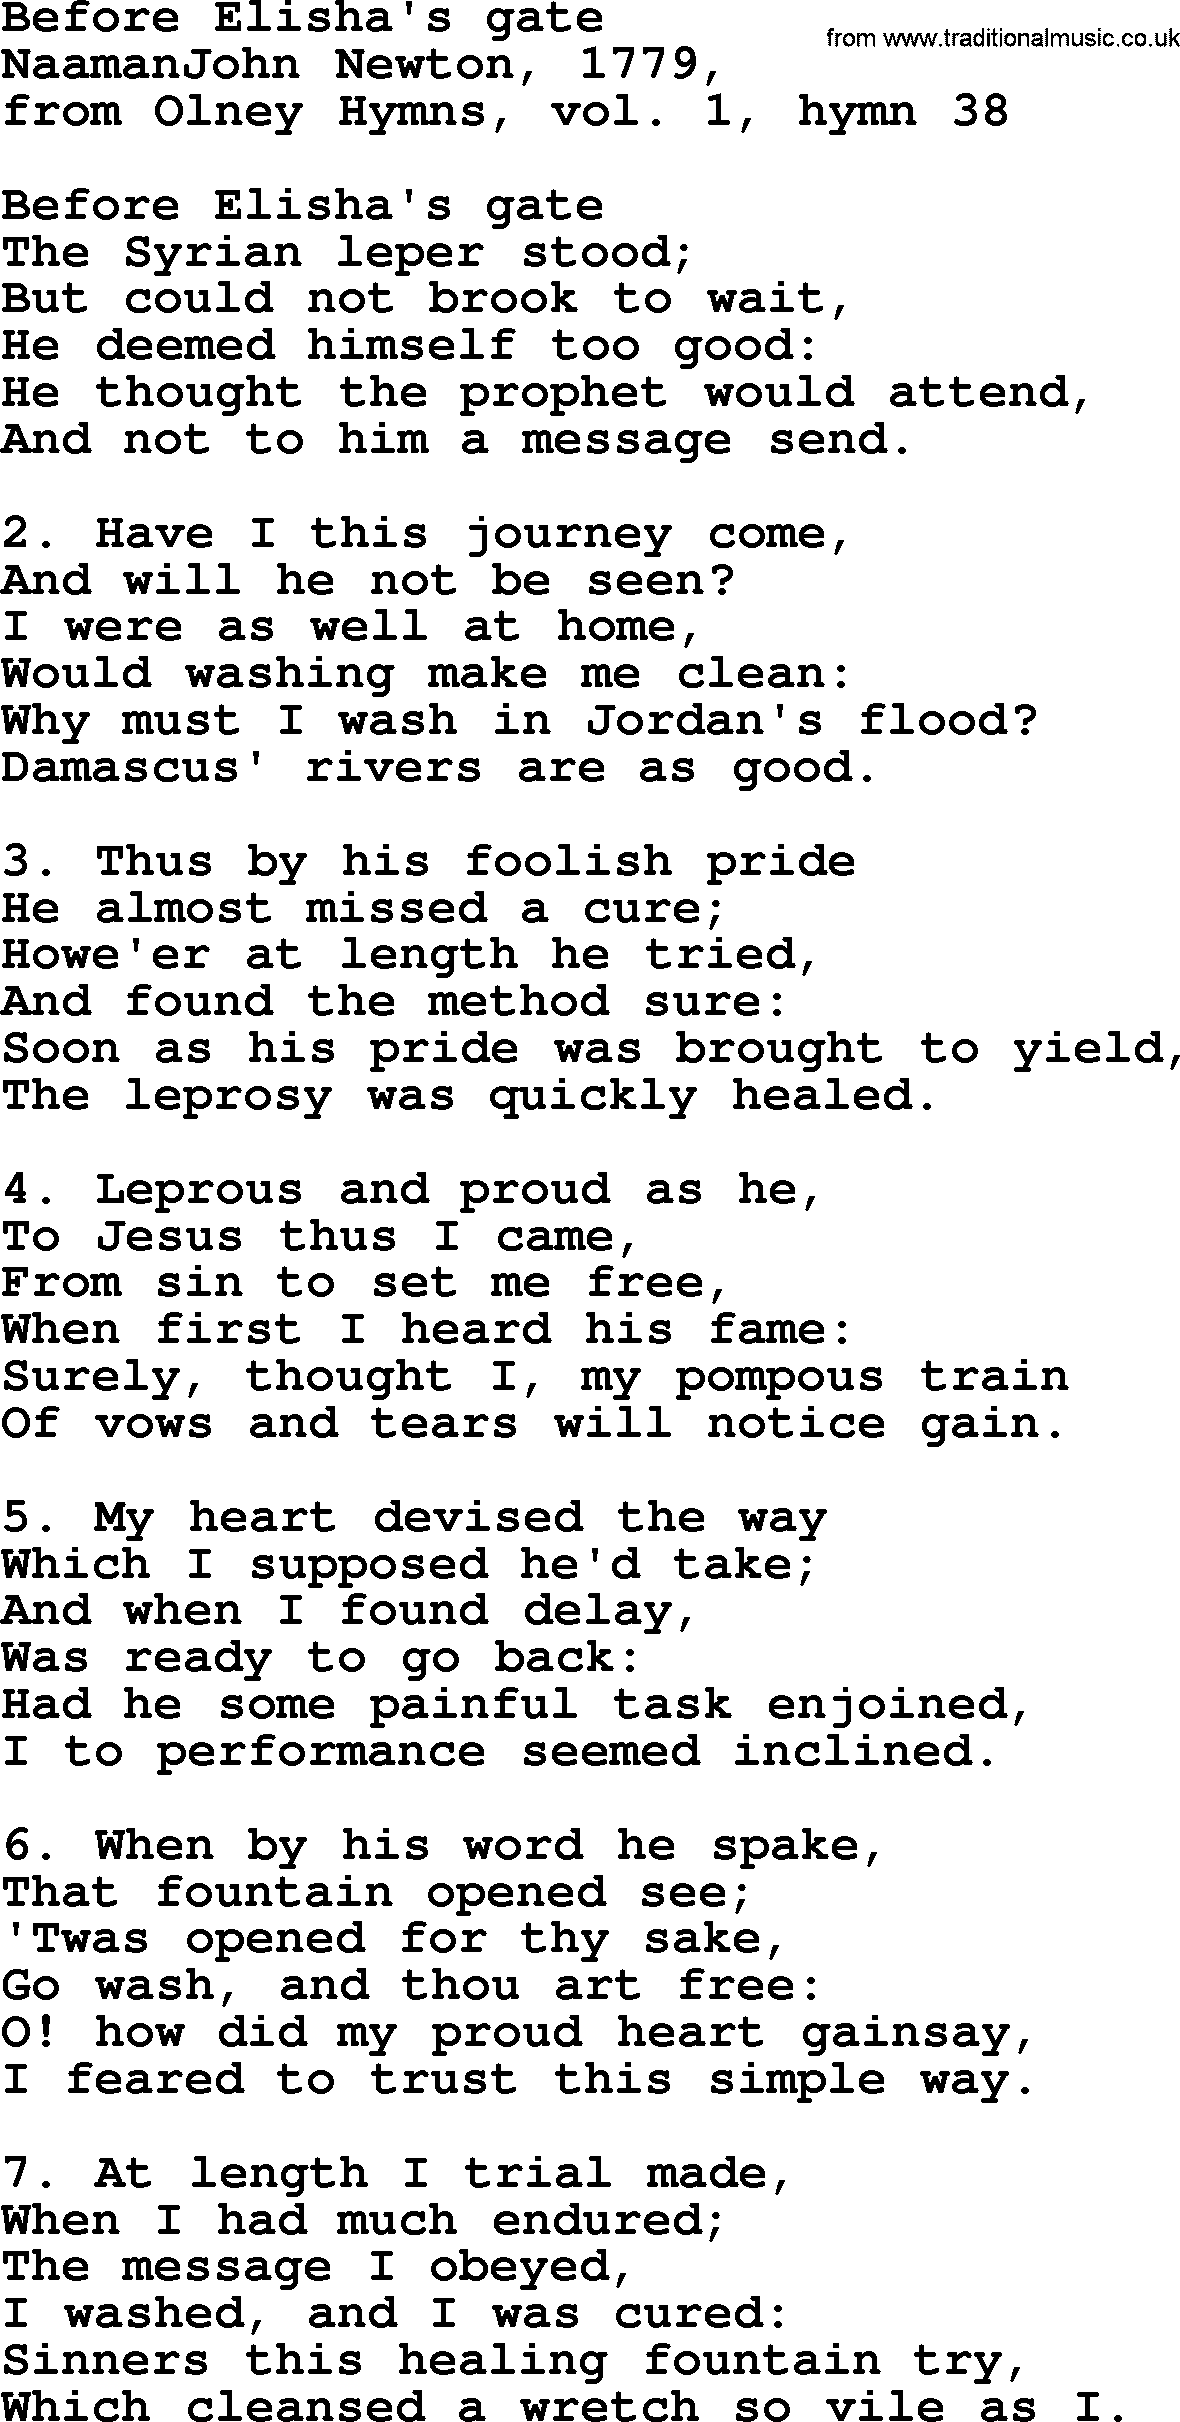 John Newton hymn: Before Elisha's Gate, lyrics